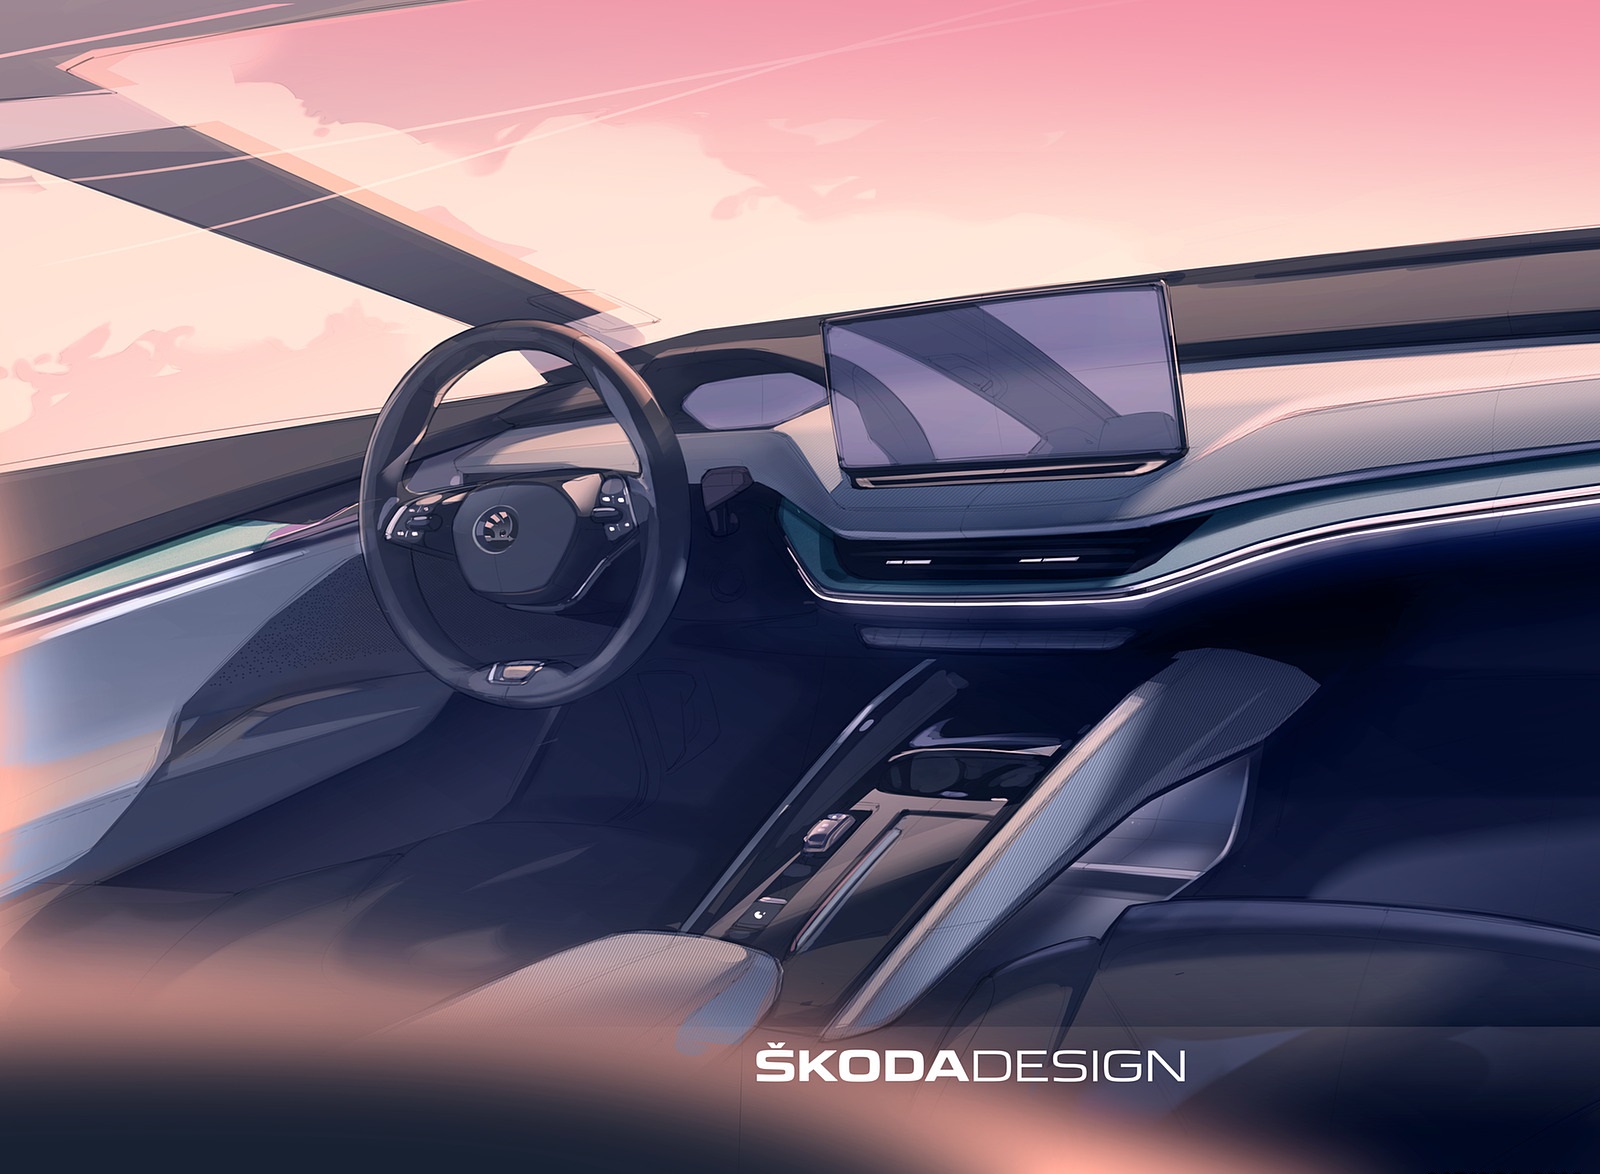 2021 Škoda ENYAQ iV Design Sketch Wallpapers #176 of 184